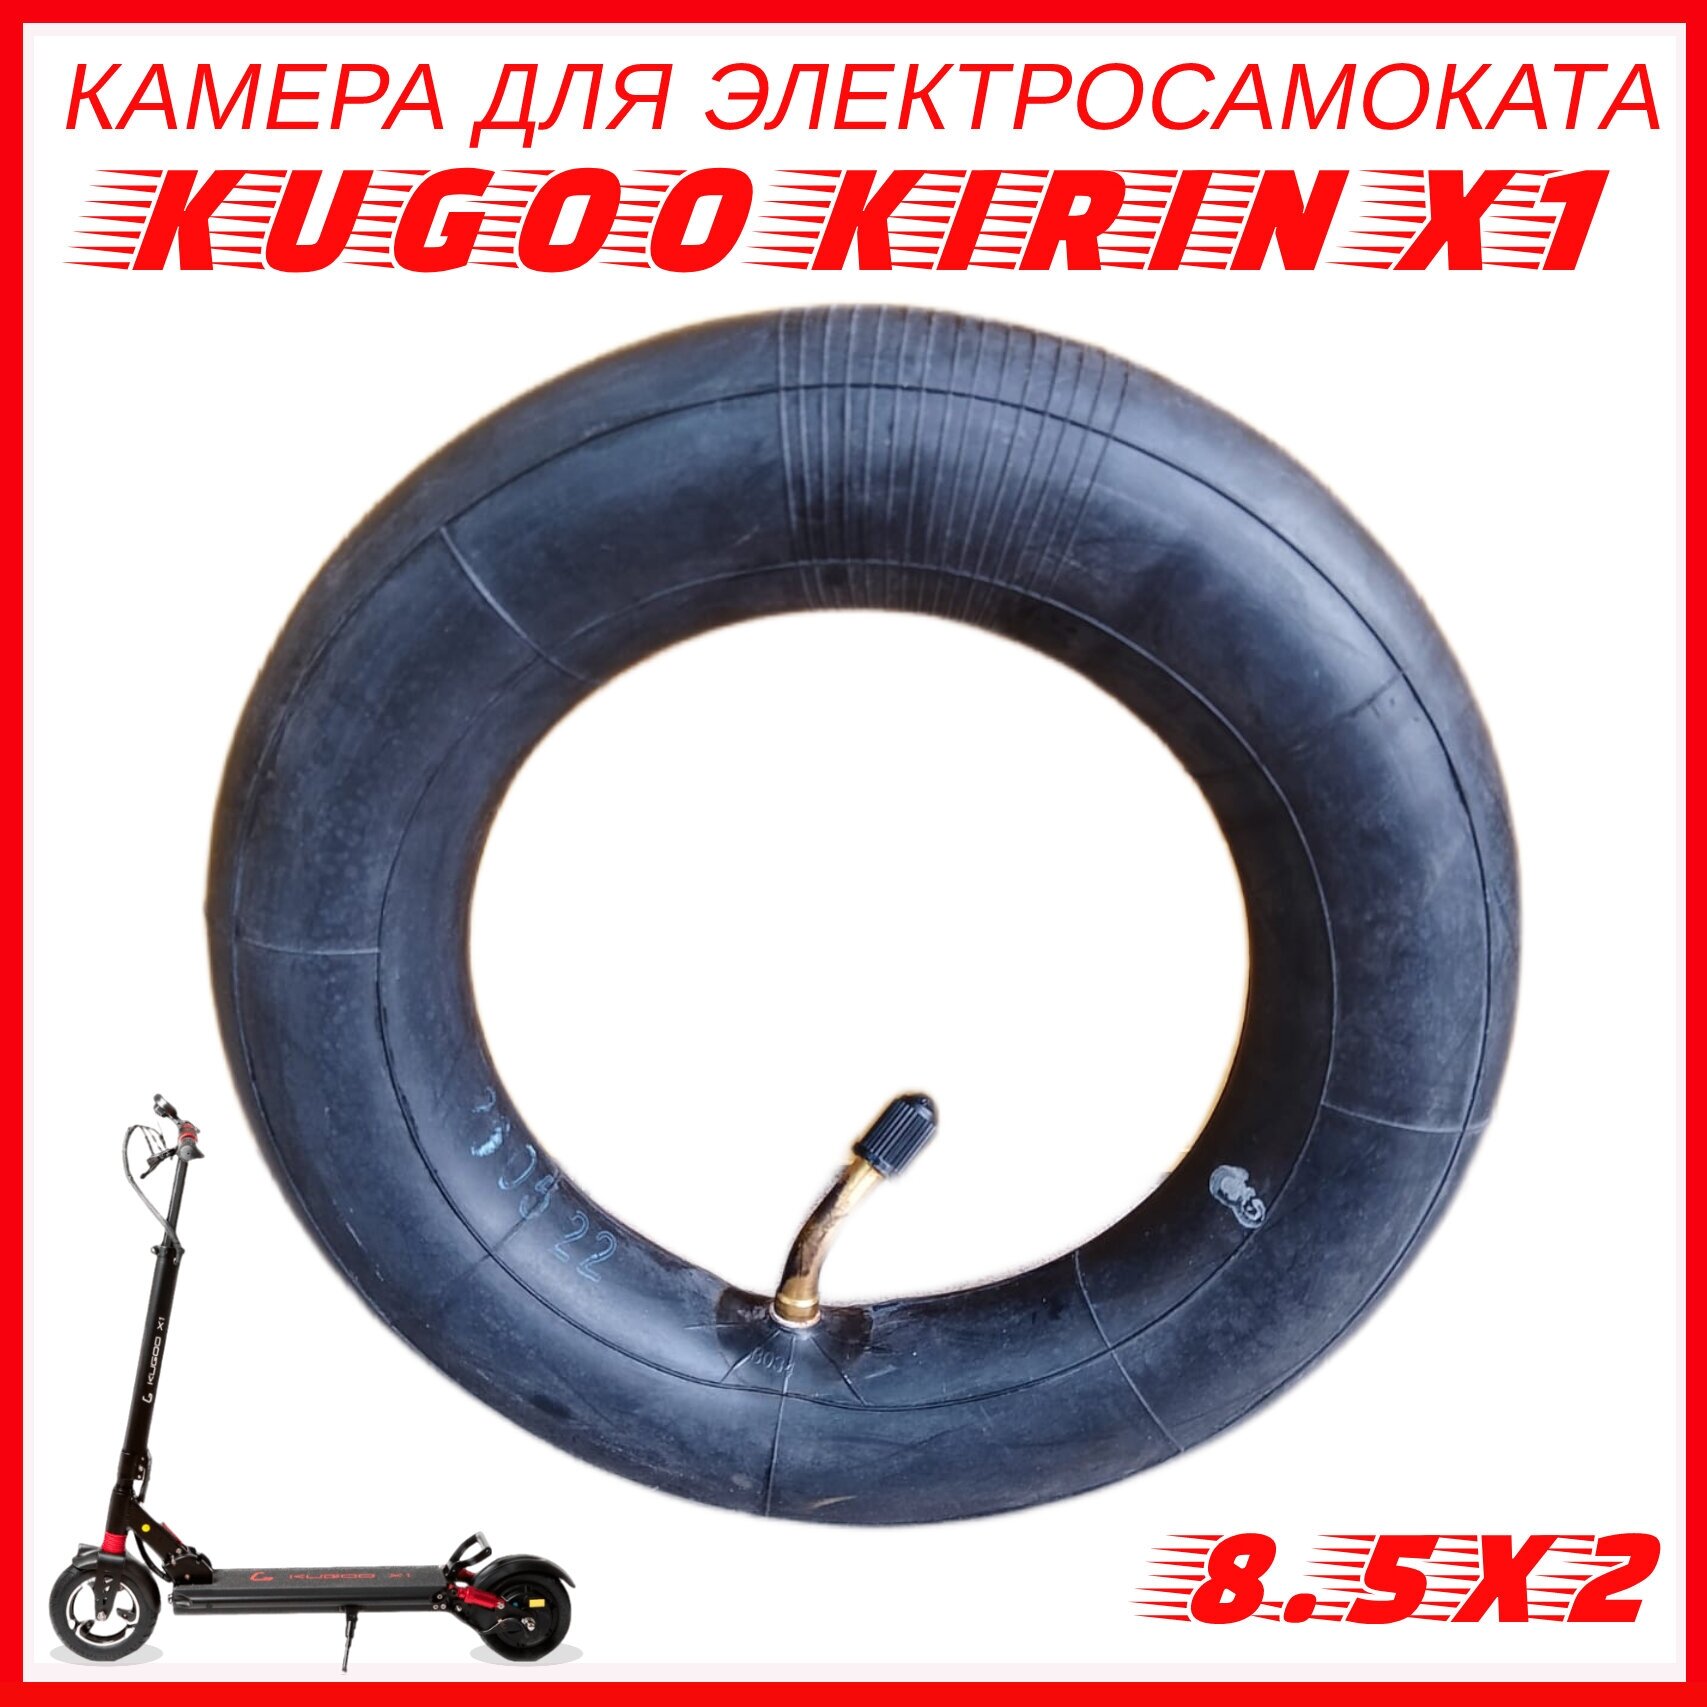 Камера для электросамоката Kugoo X1 / HX с кривым ниппелем 8.5 дюймов